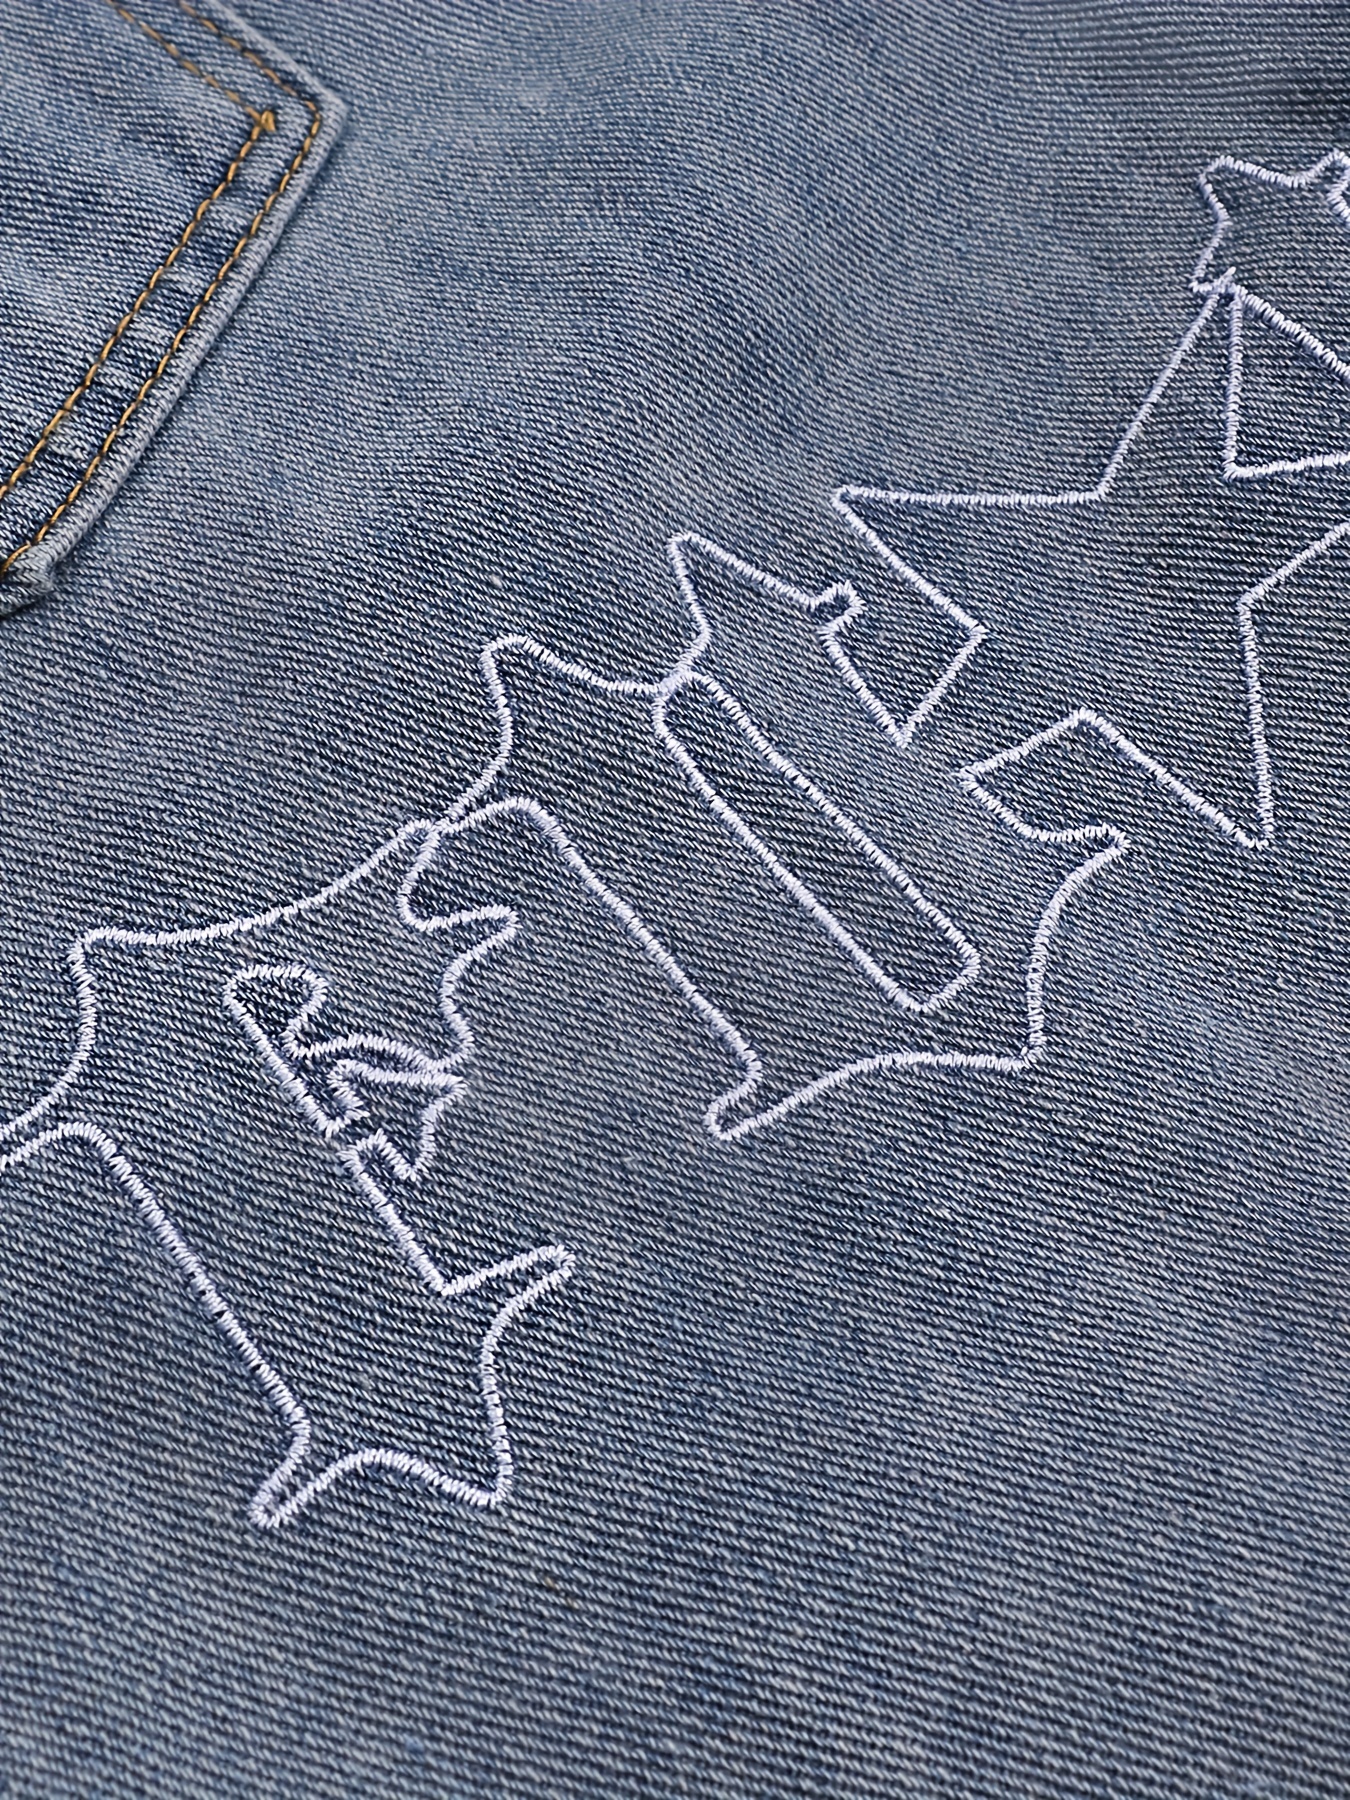 Men's Letter Embroidery Jeans, Chic Street Style Retro Denim Pants